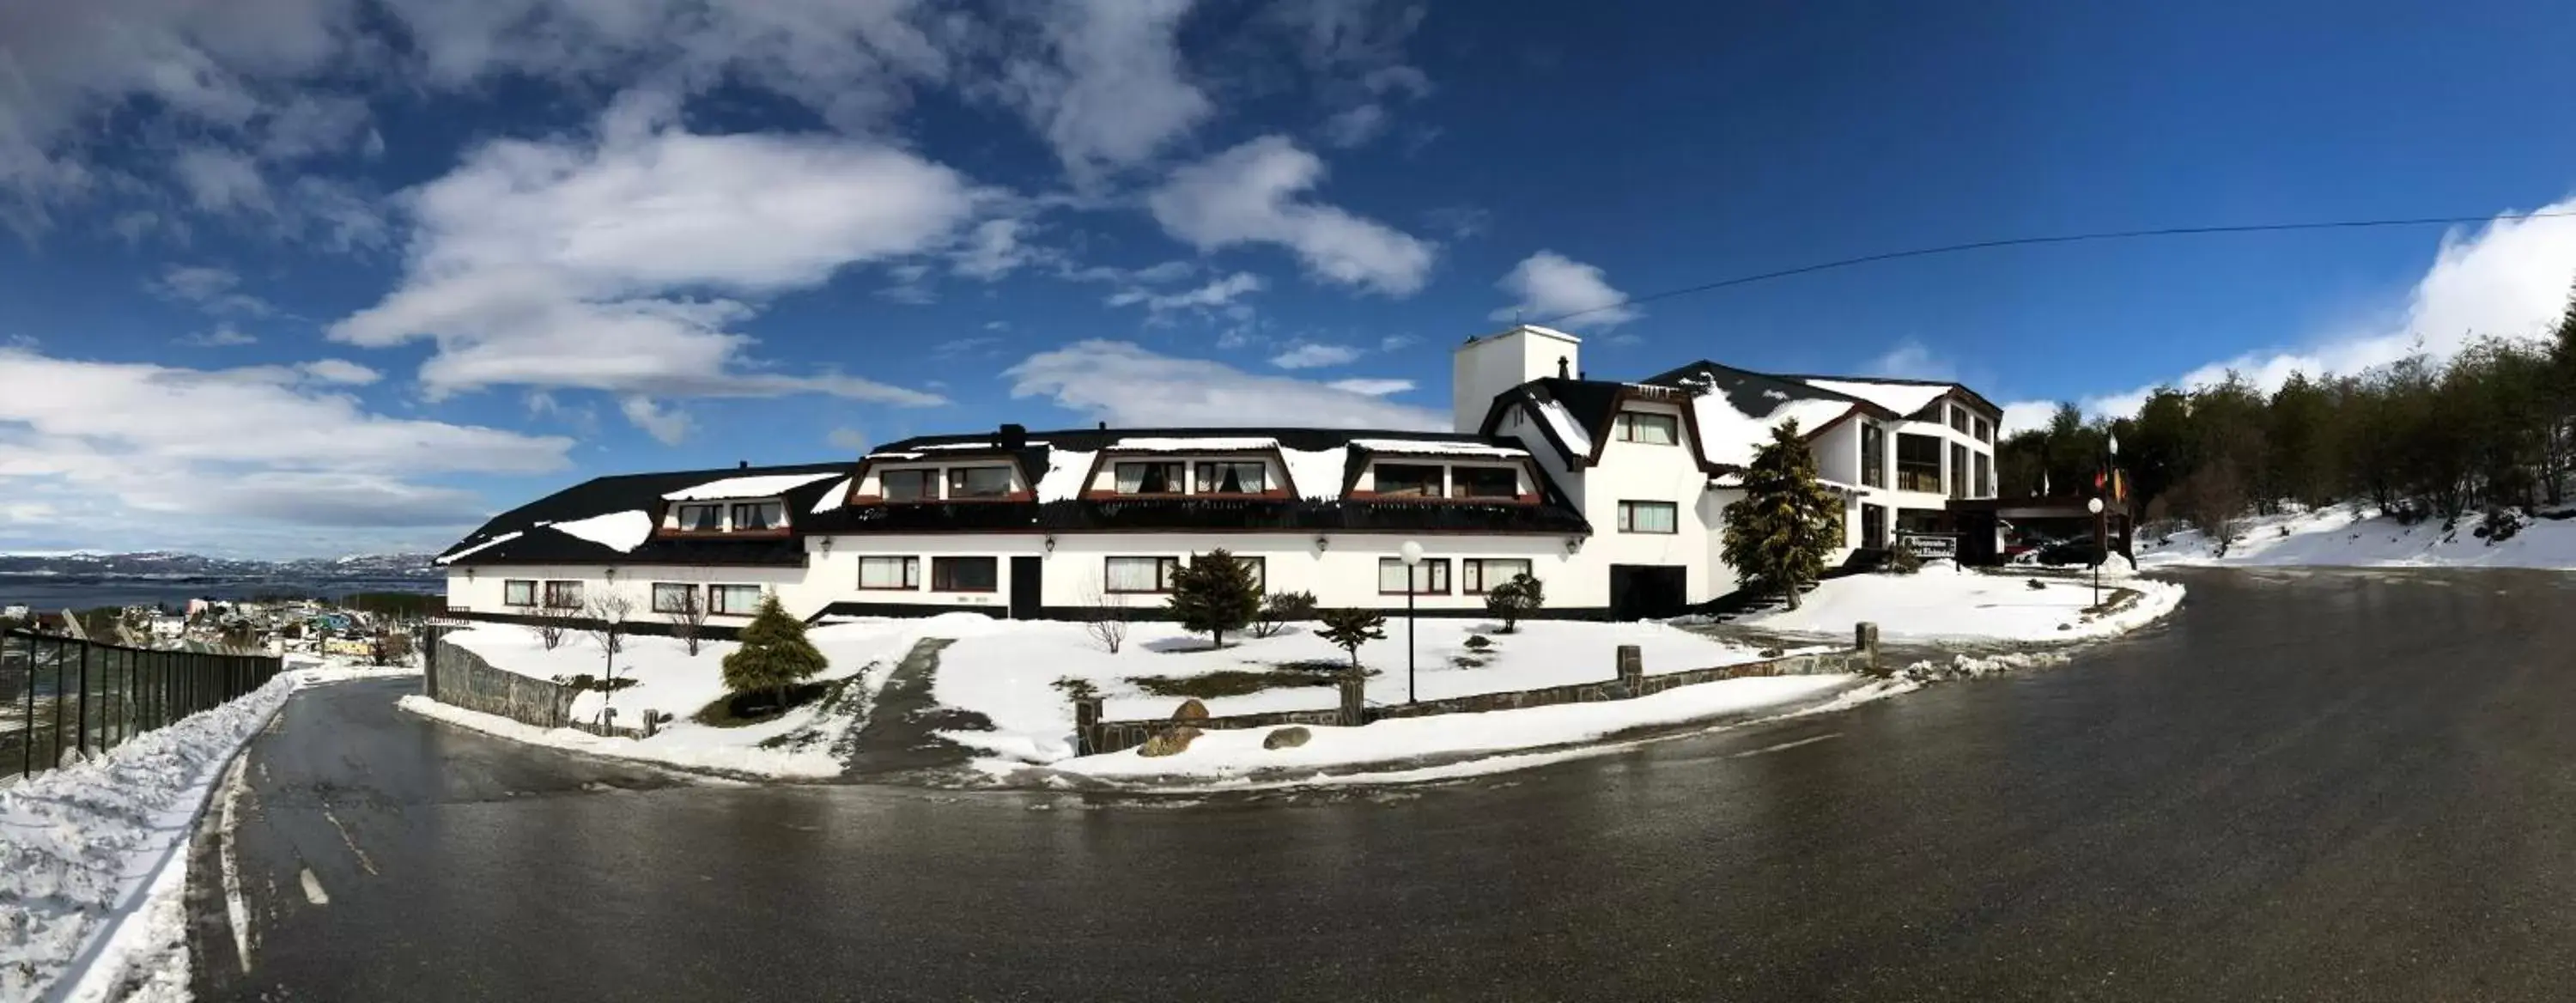 Winter in Hotel Ushuaia